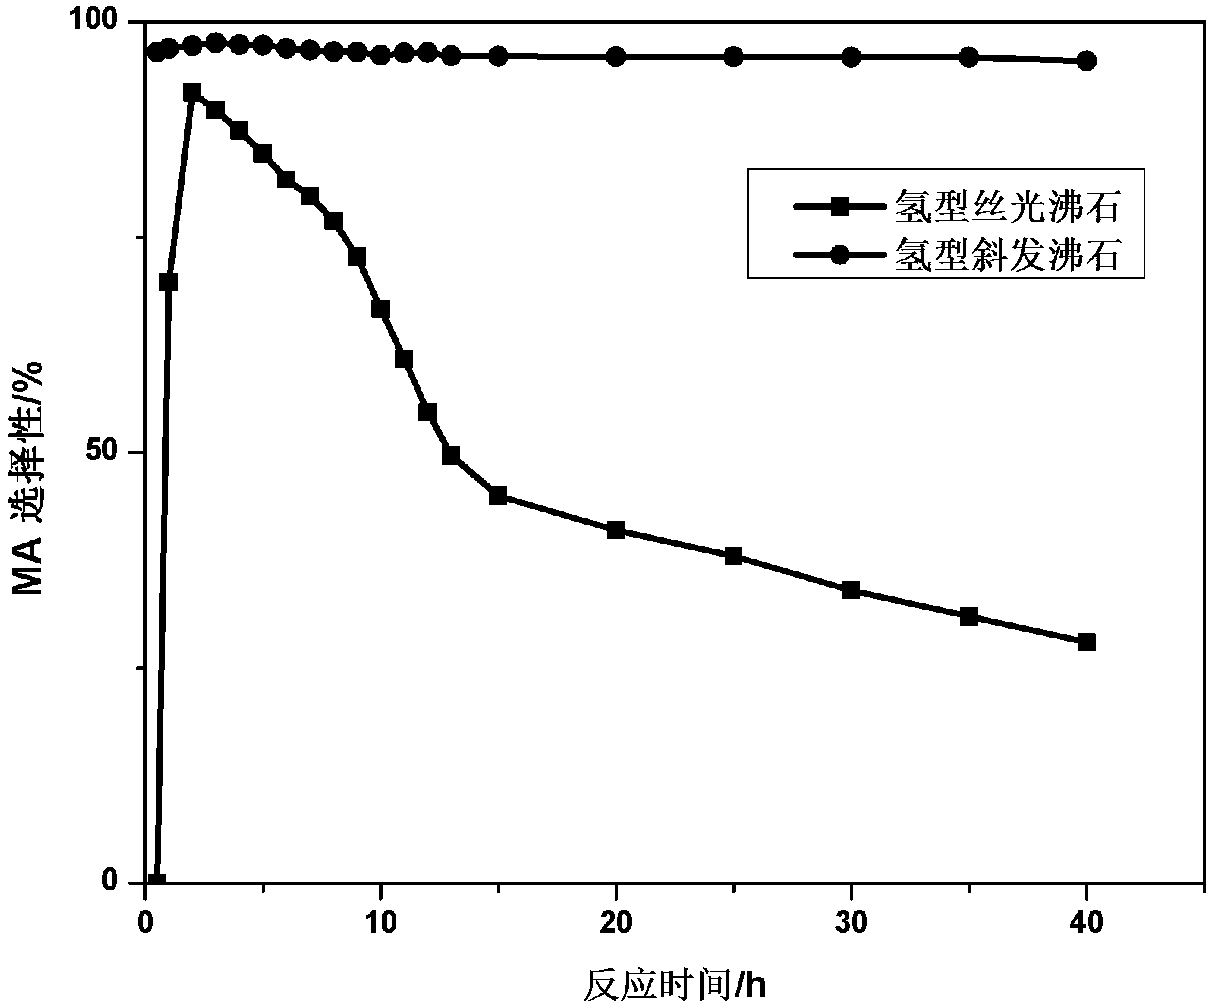 Method for preparing methyl acetate by carbonylation of dimethyl ether